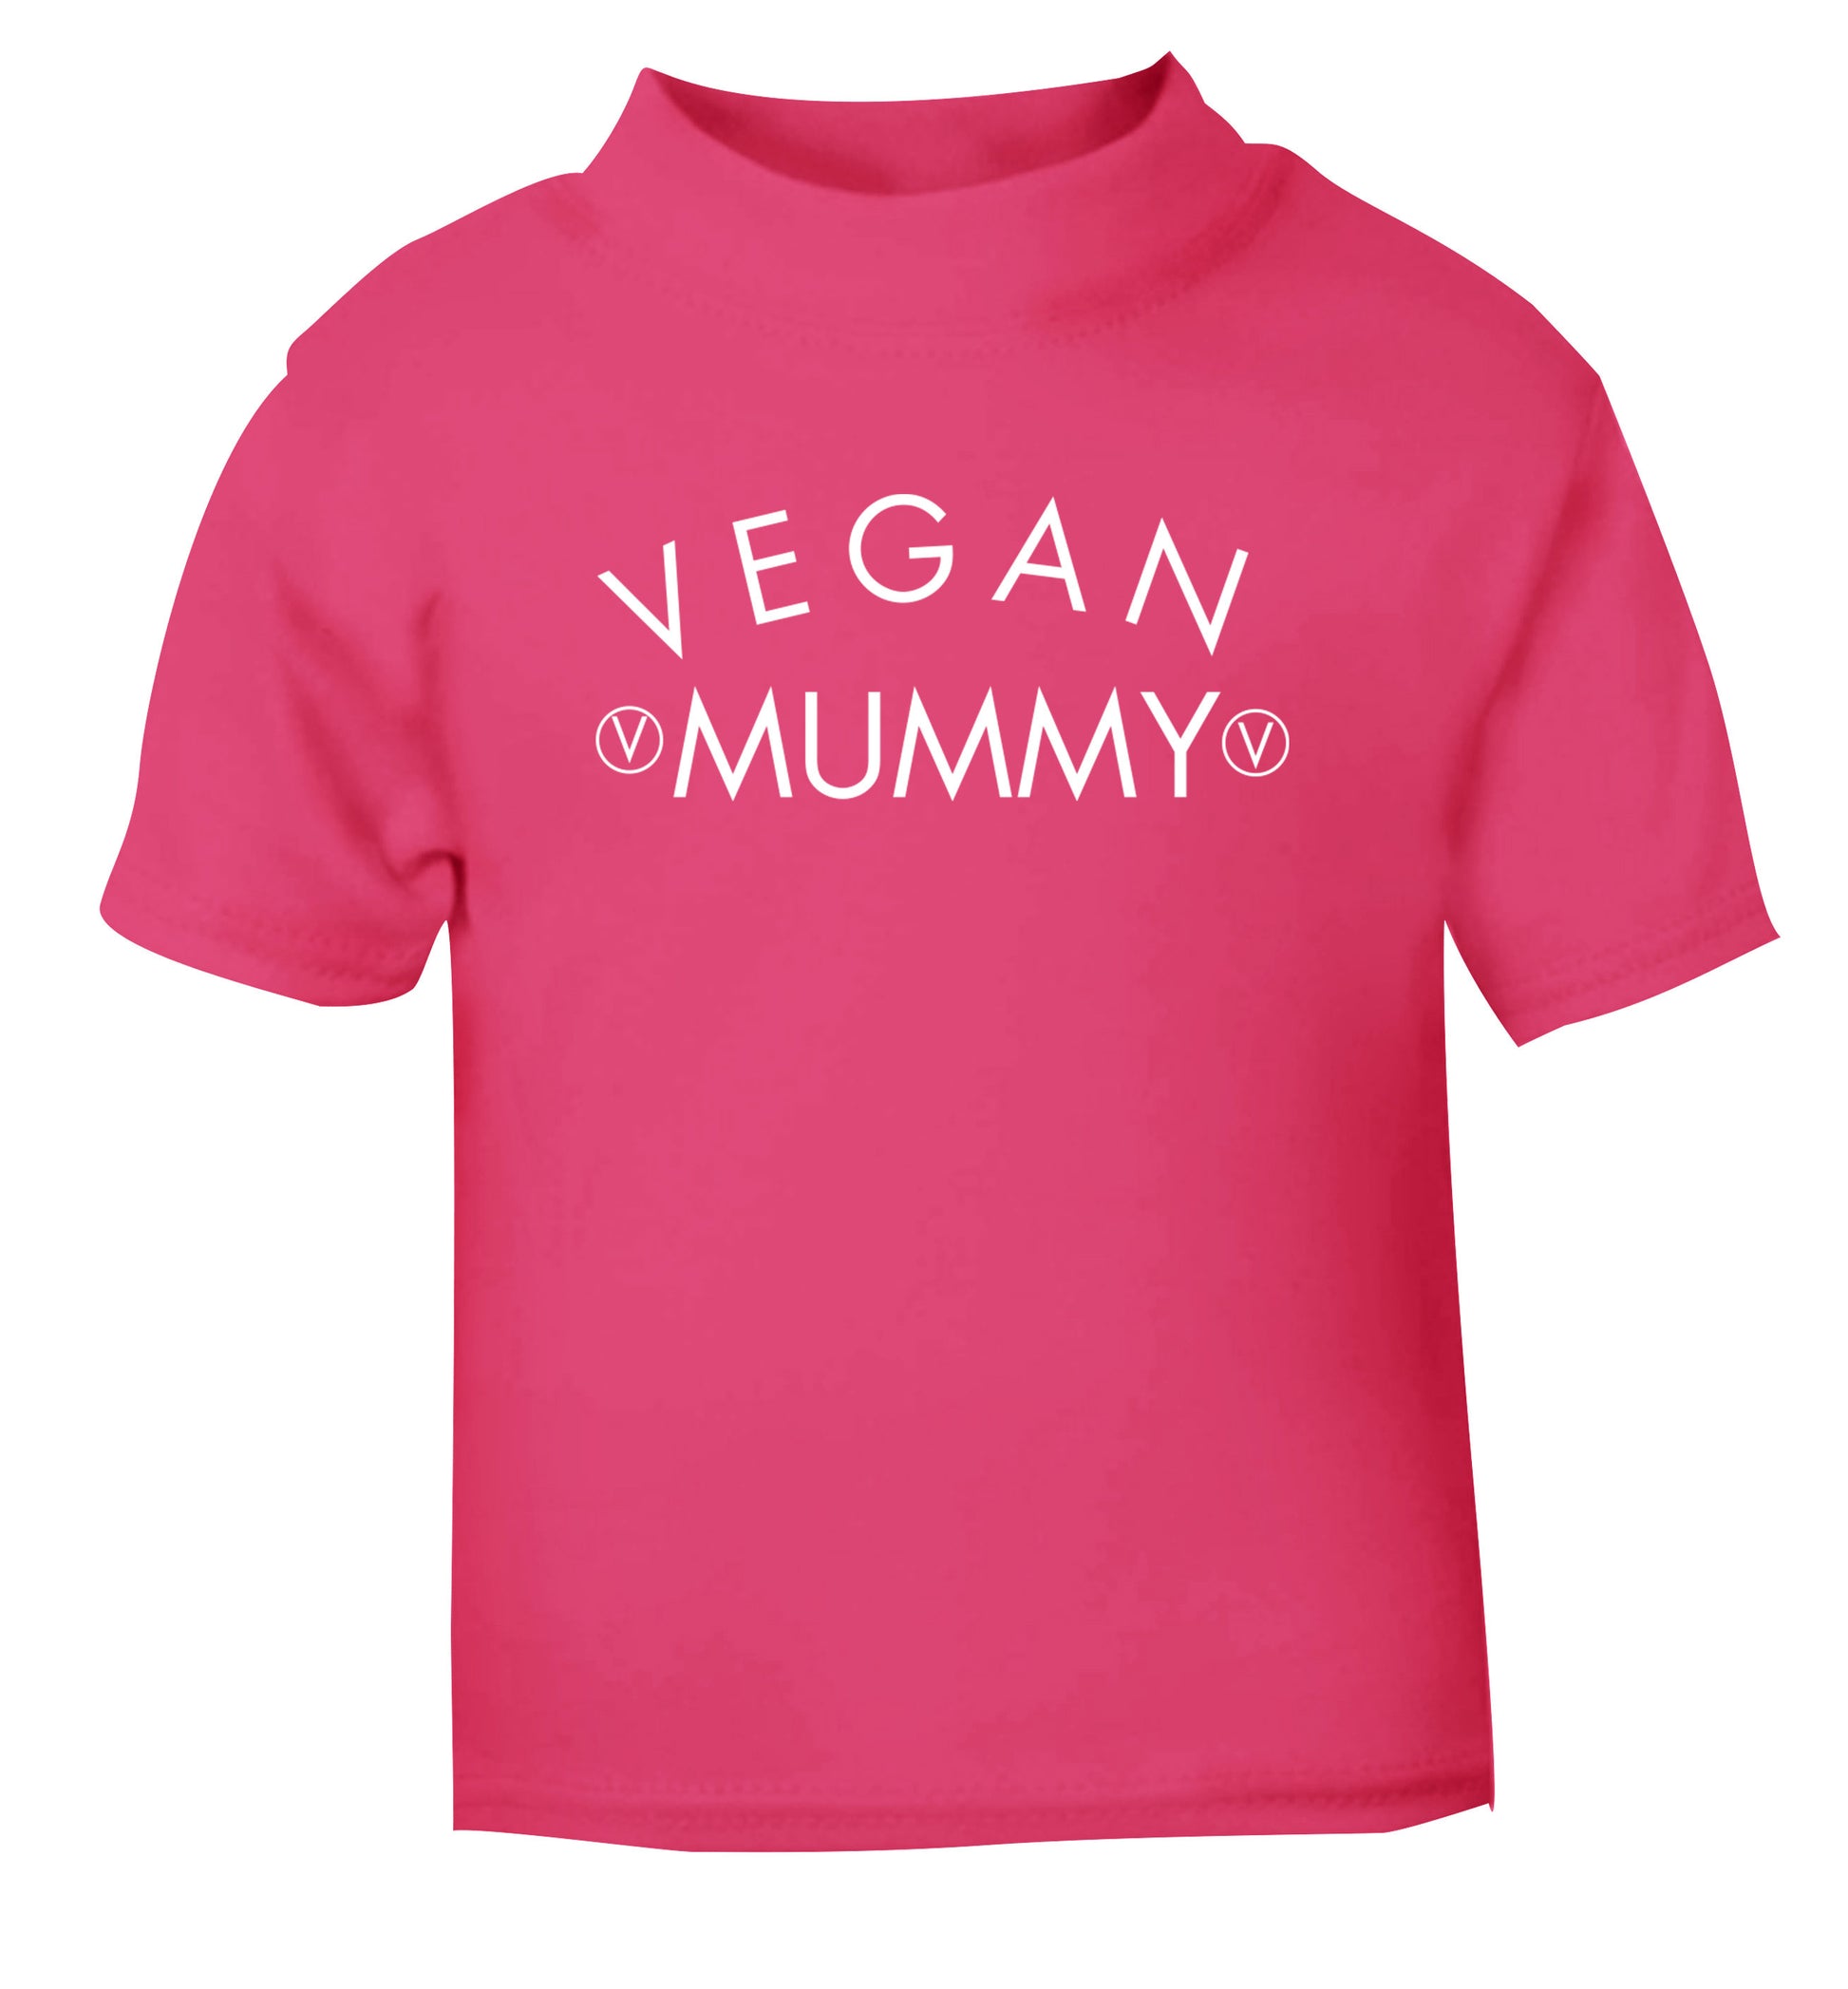 Vegan mummy pink Baby Toddler Tshirt 2 Years